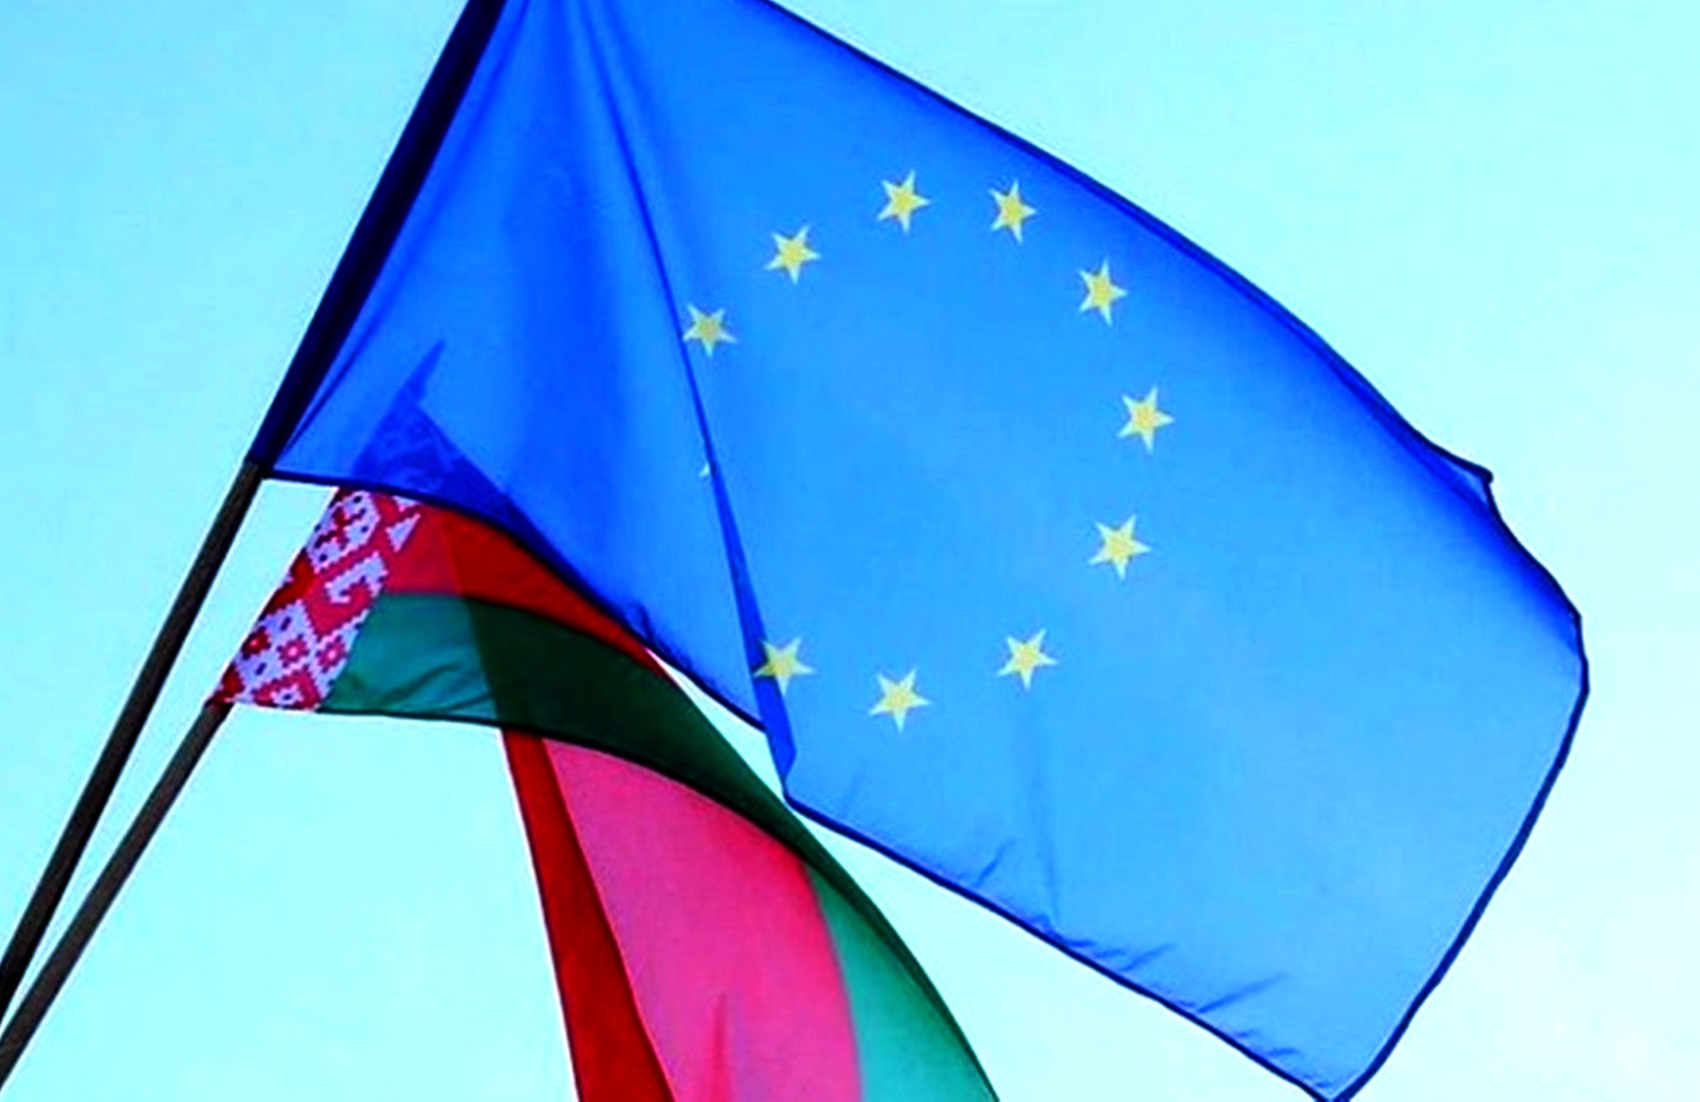 Западные страны беларусь. Беларусь и Европейский Союз. Белоруссиямфлаг Евросоюз. Флаг ЕС И флаг Белоруссия. Беларусь 2020 флаг ЕС.